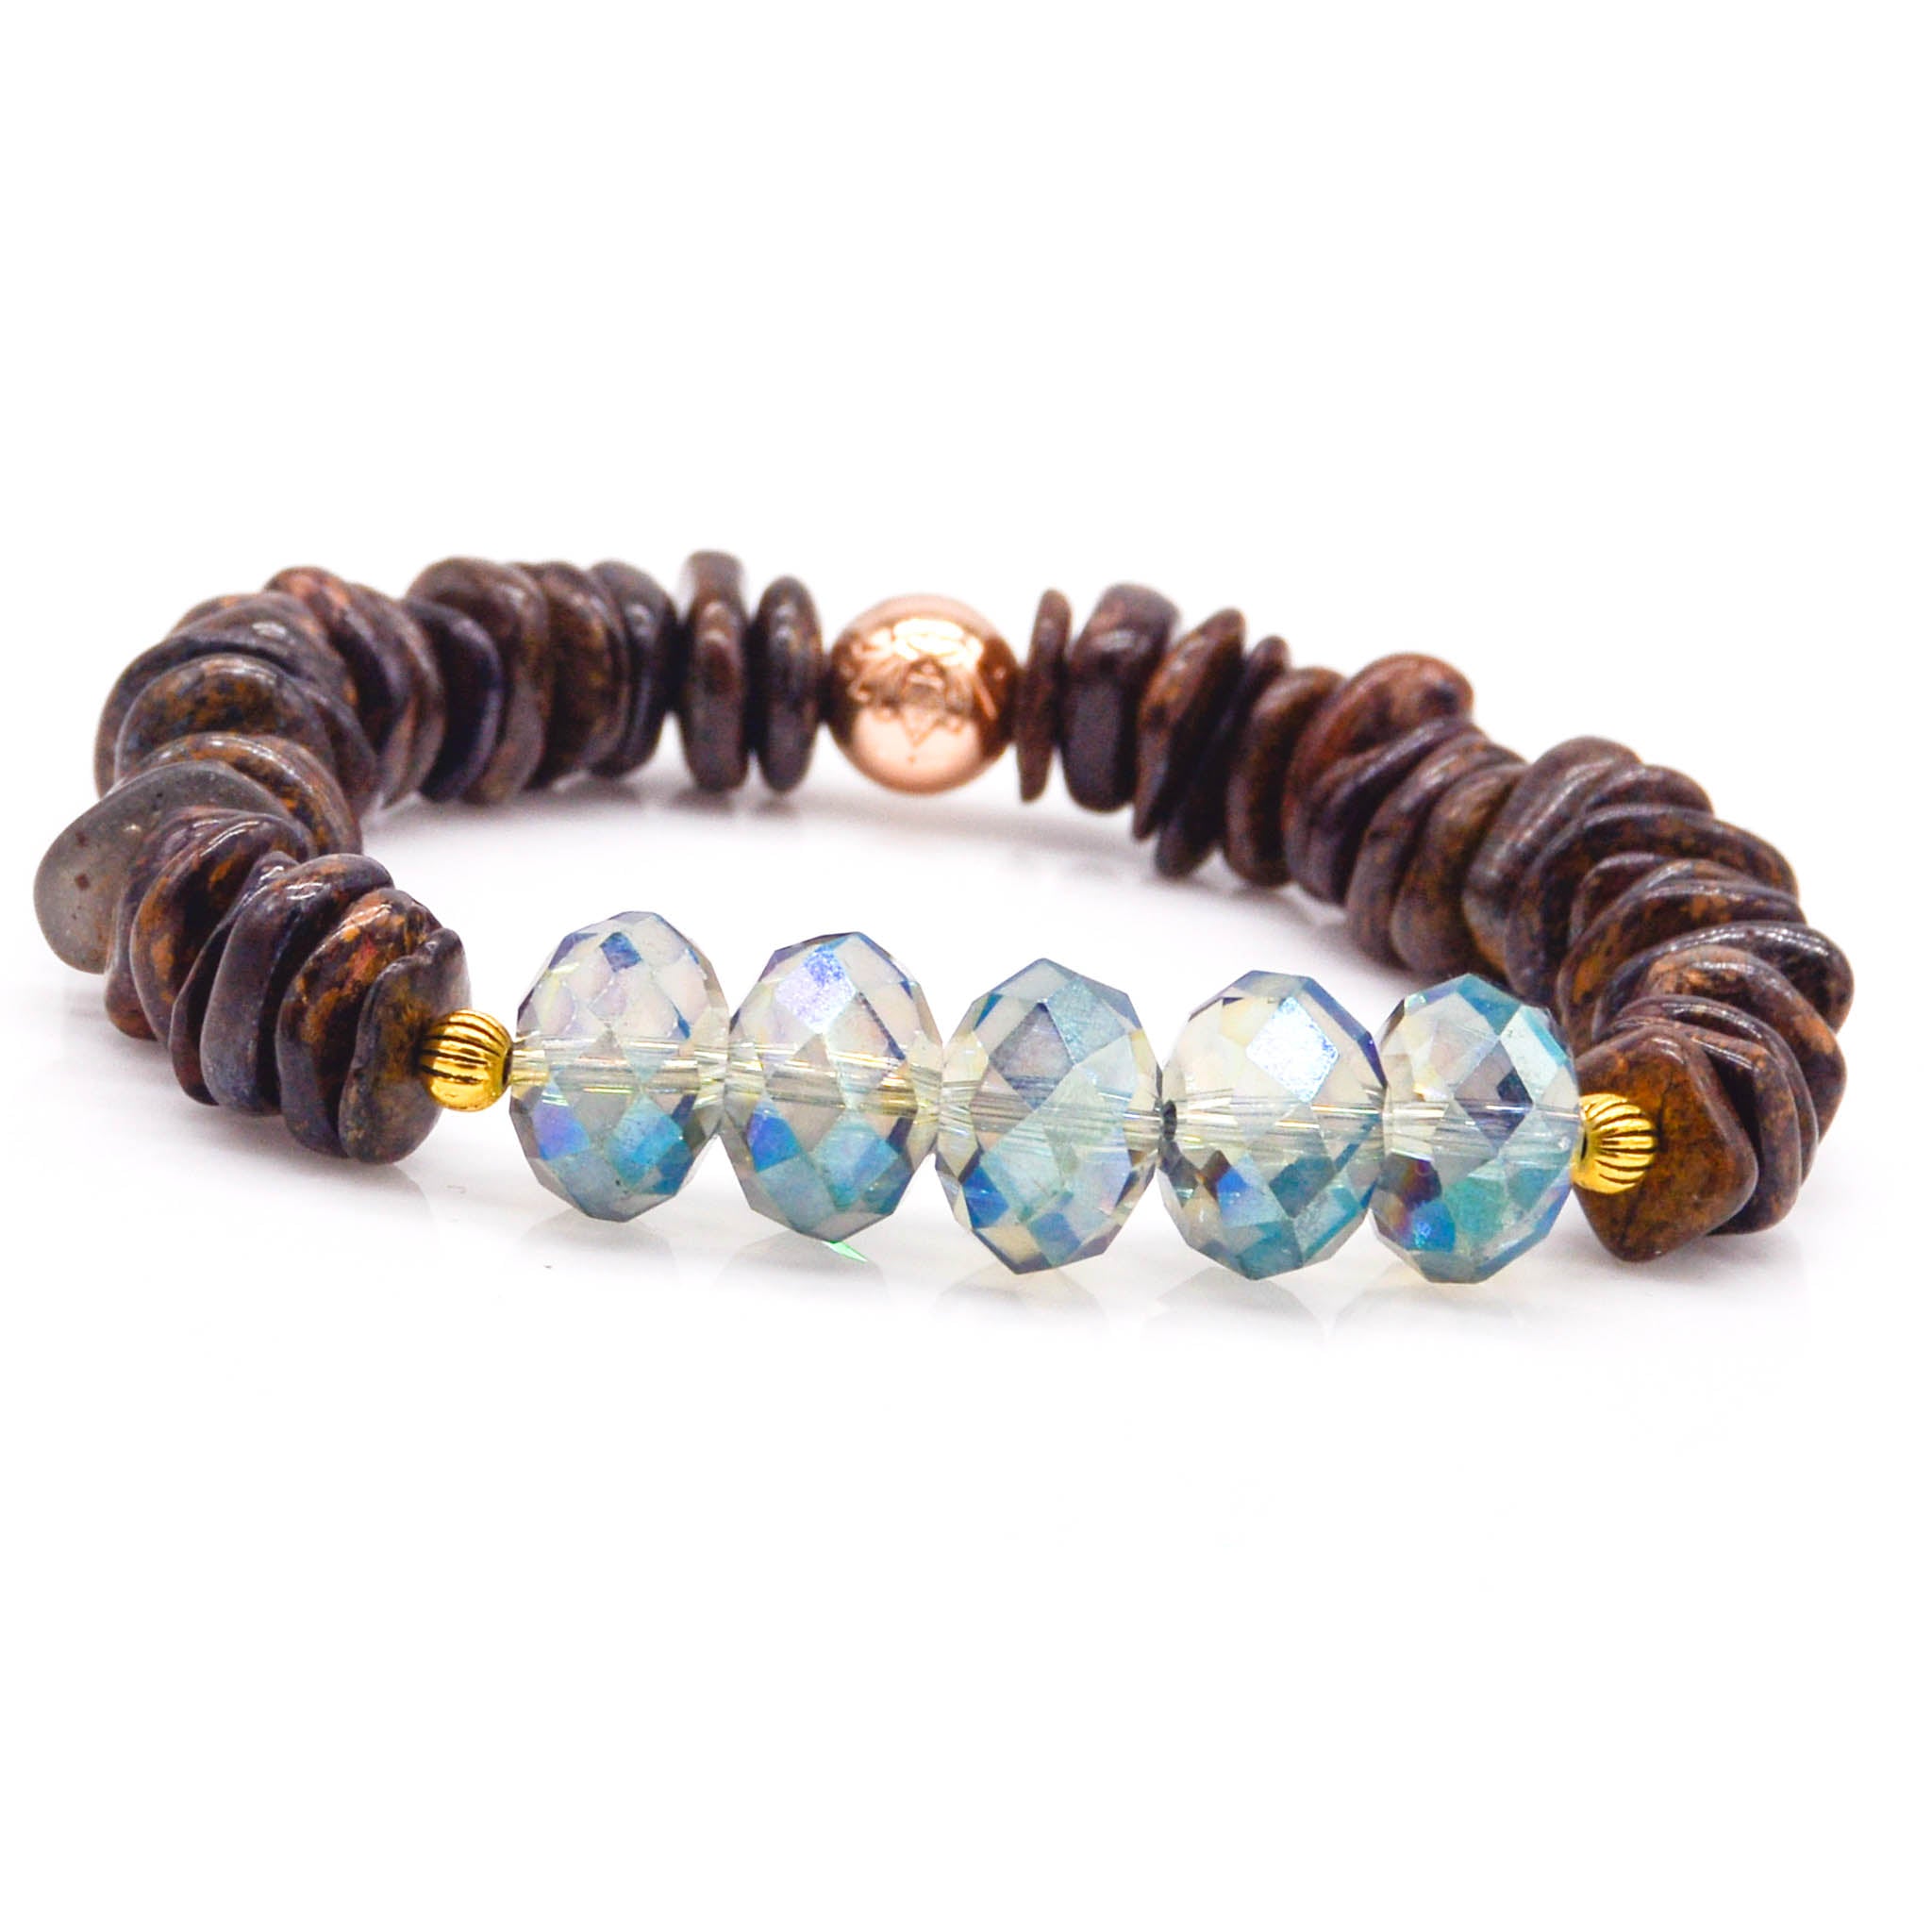 a bronzite bracelet with a blue bead on it